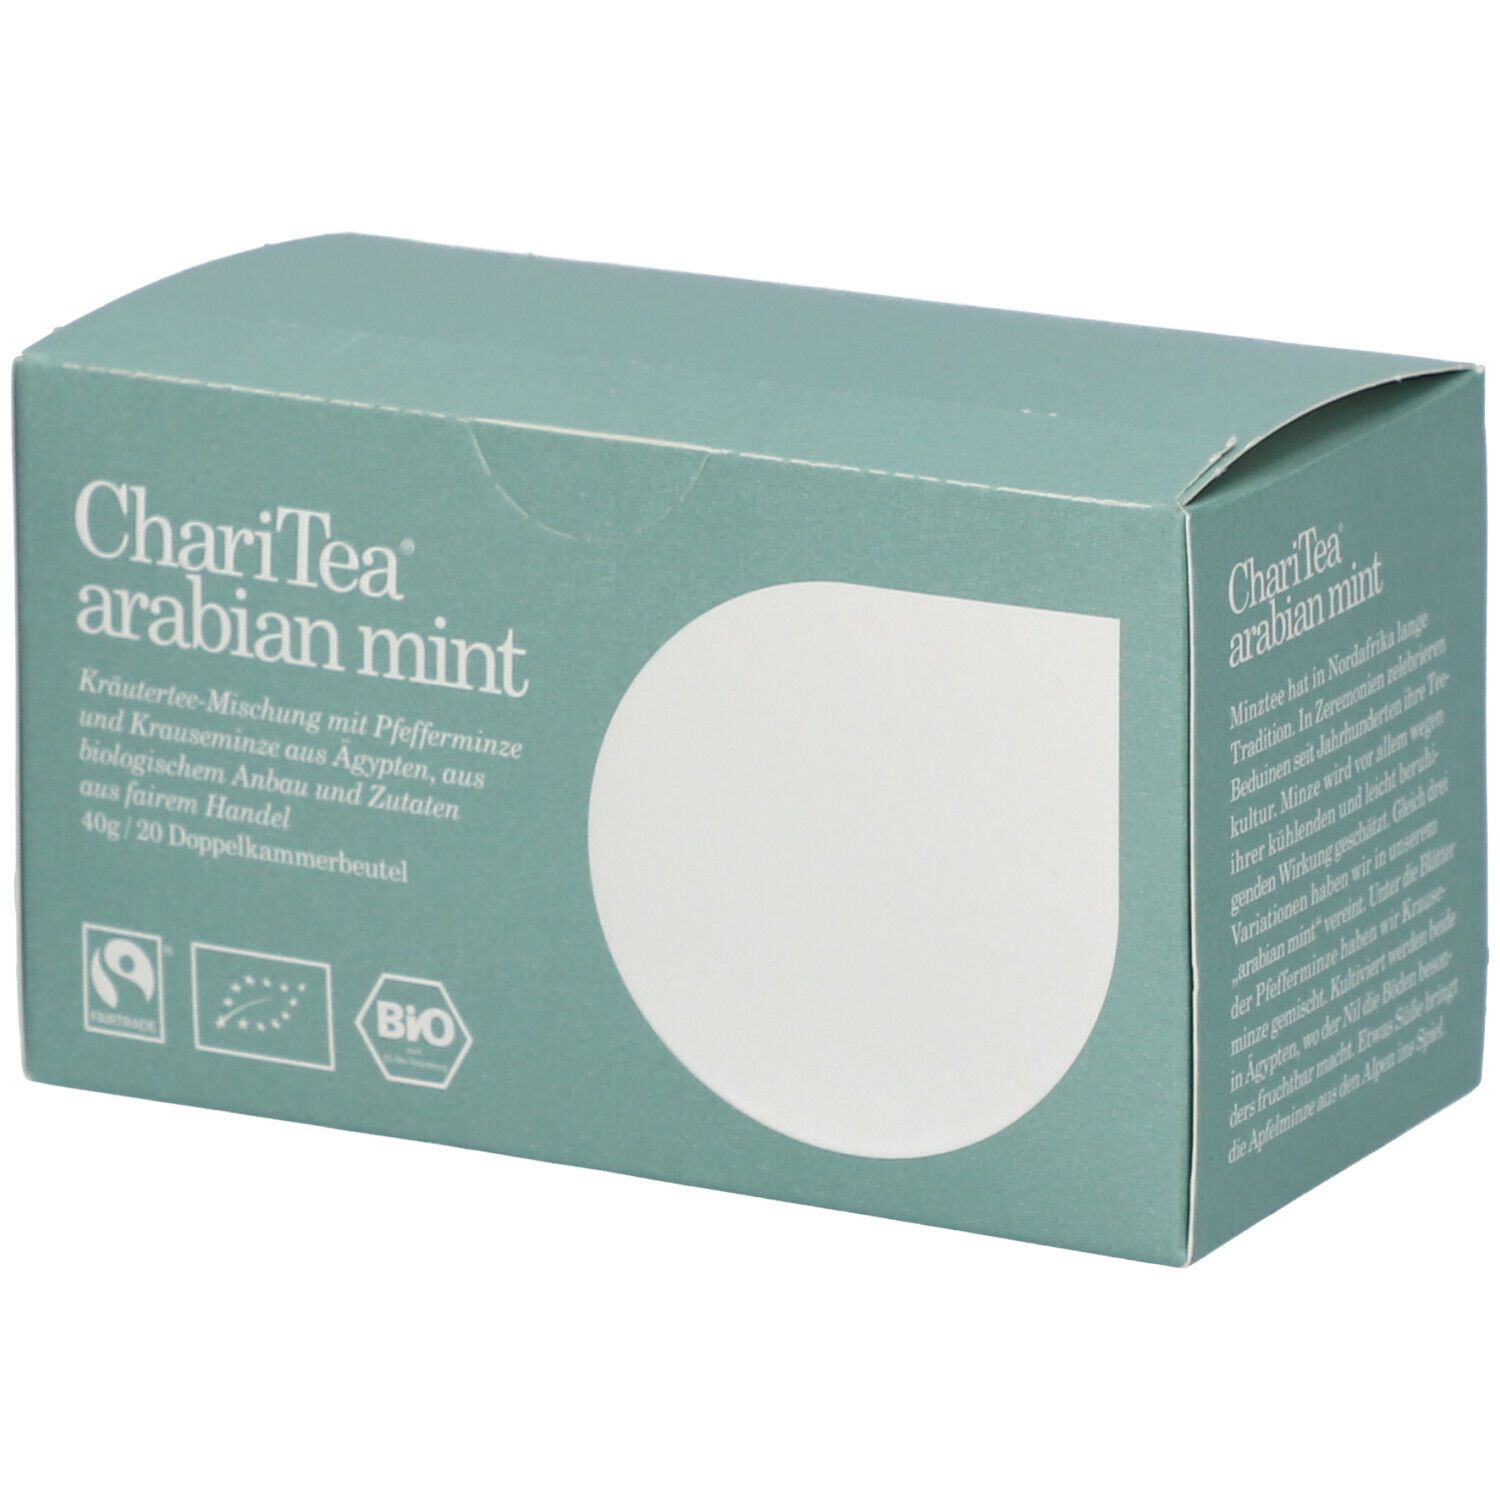 ChariTea® arabian mint